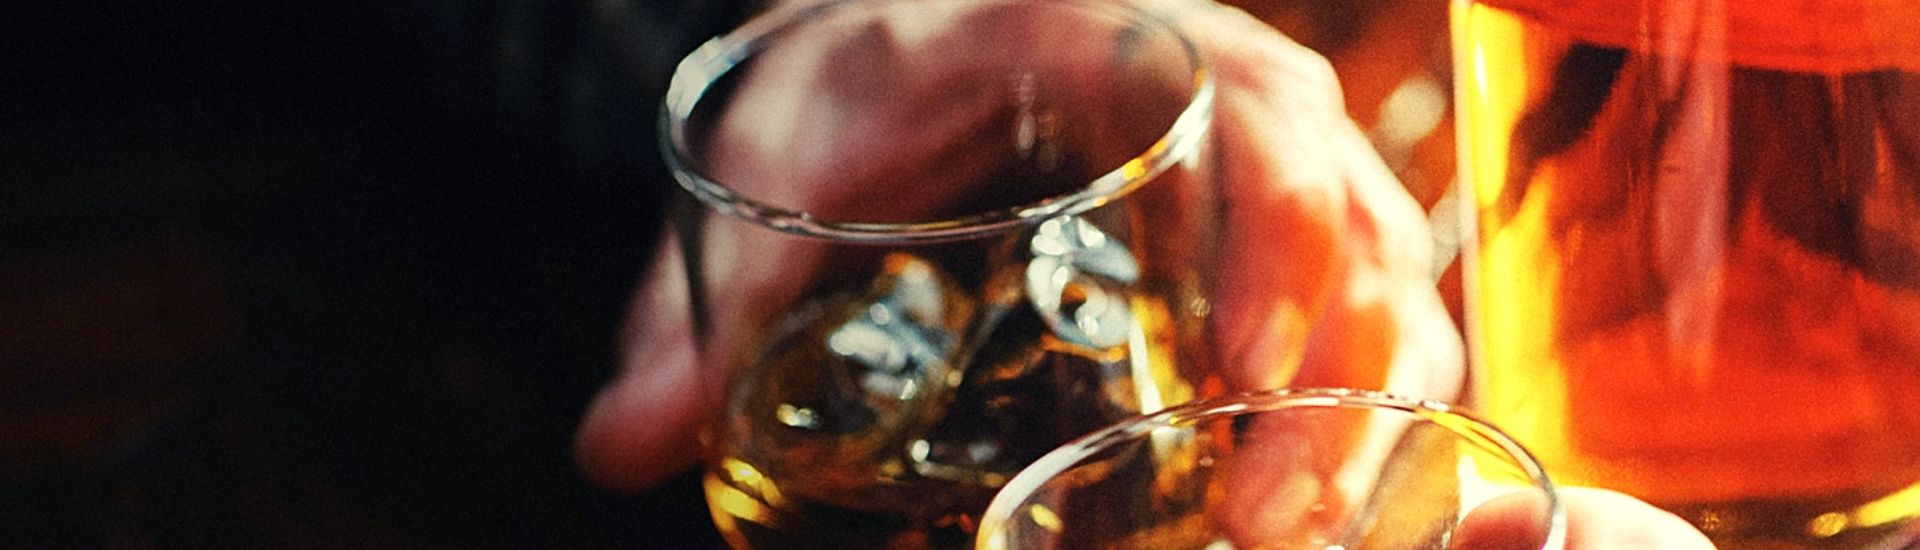 stranahans whiskey on glass